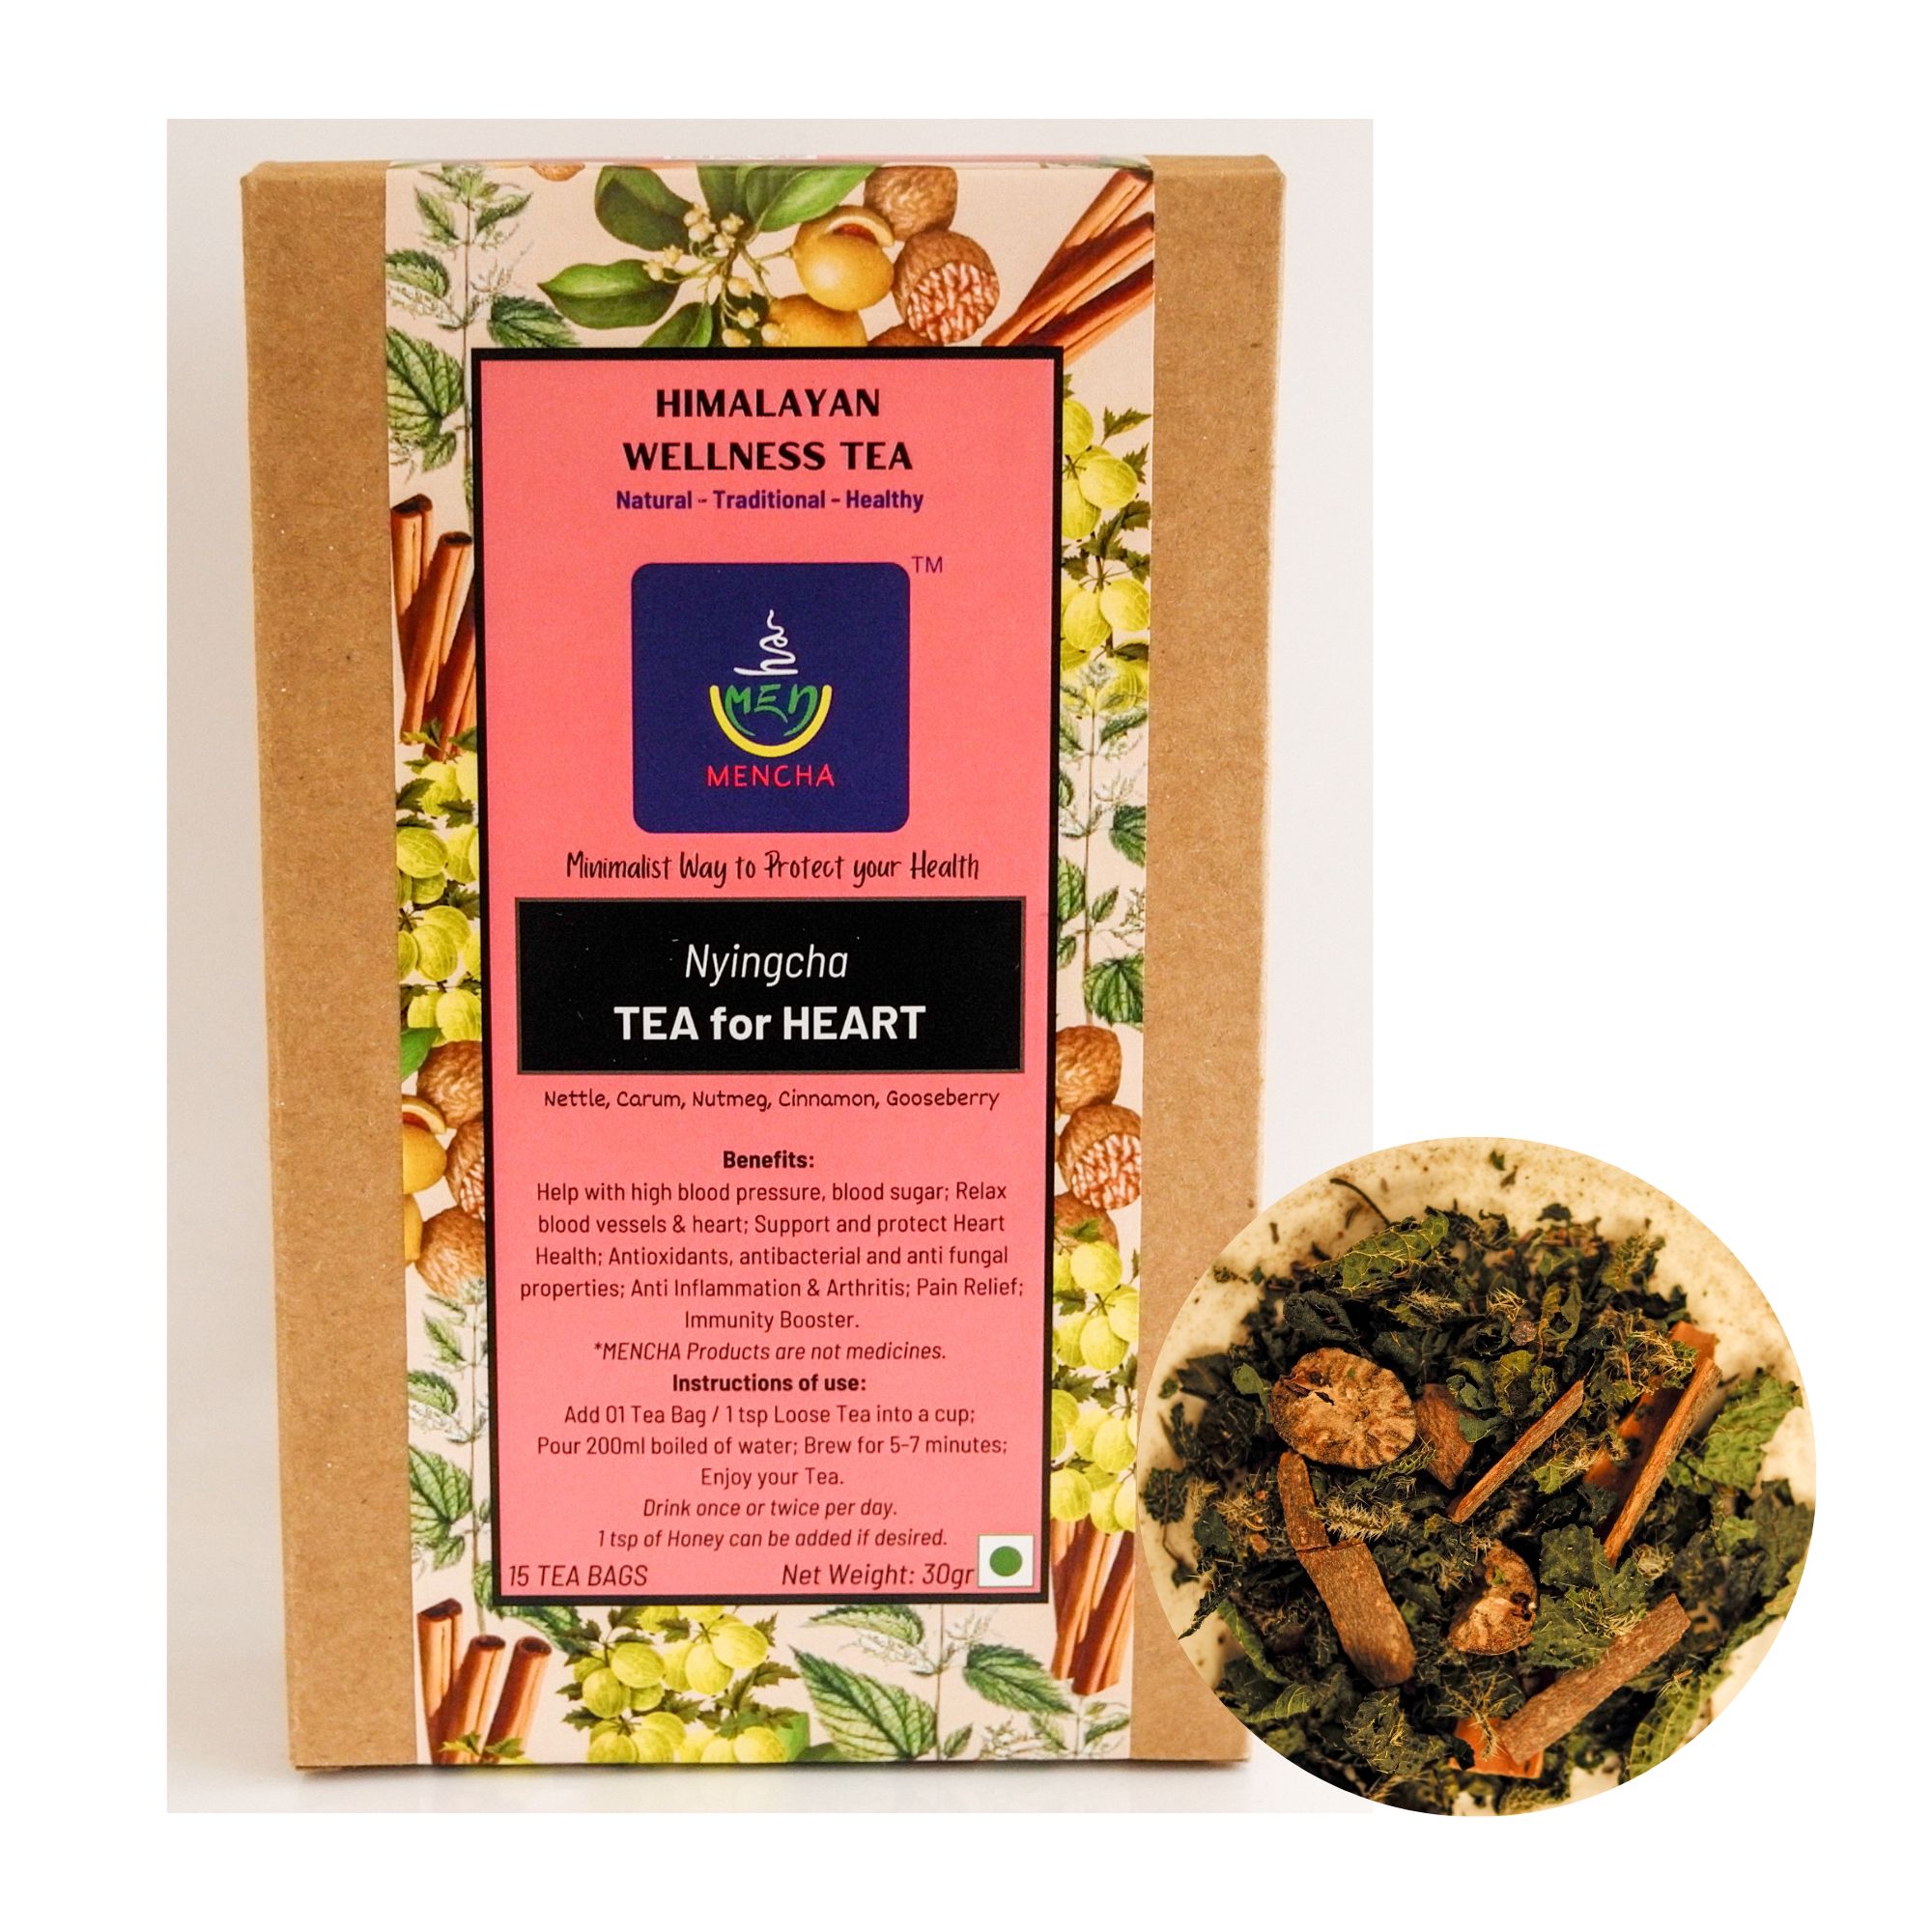 MENCHA - Heart Tea - Handmade - Caffeine Free - Himalayan Herbs for Support Heart Health, High Blood Pressure, Antioxidant - 15 Tea Bags